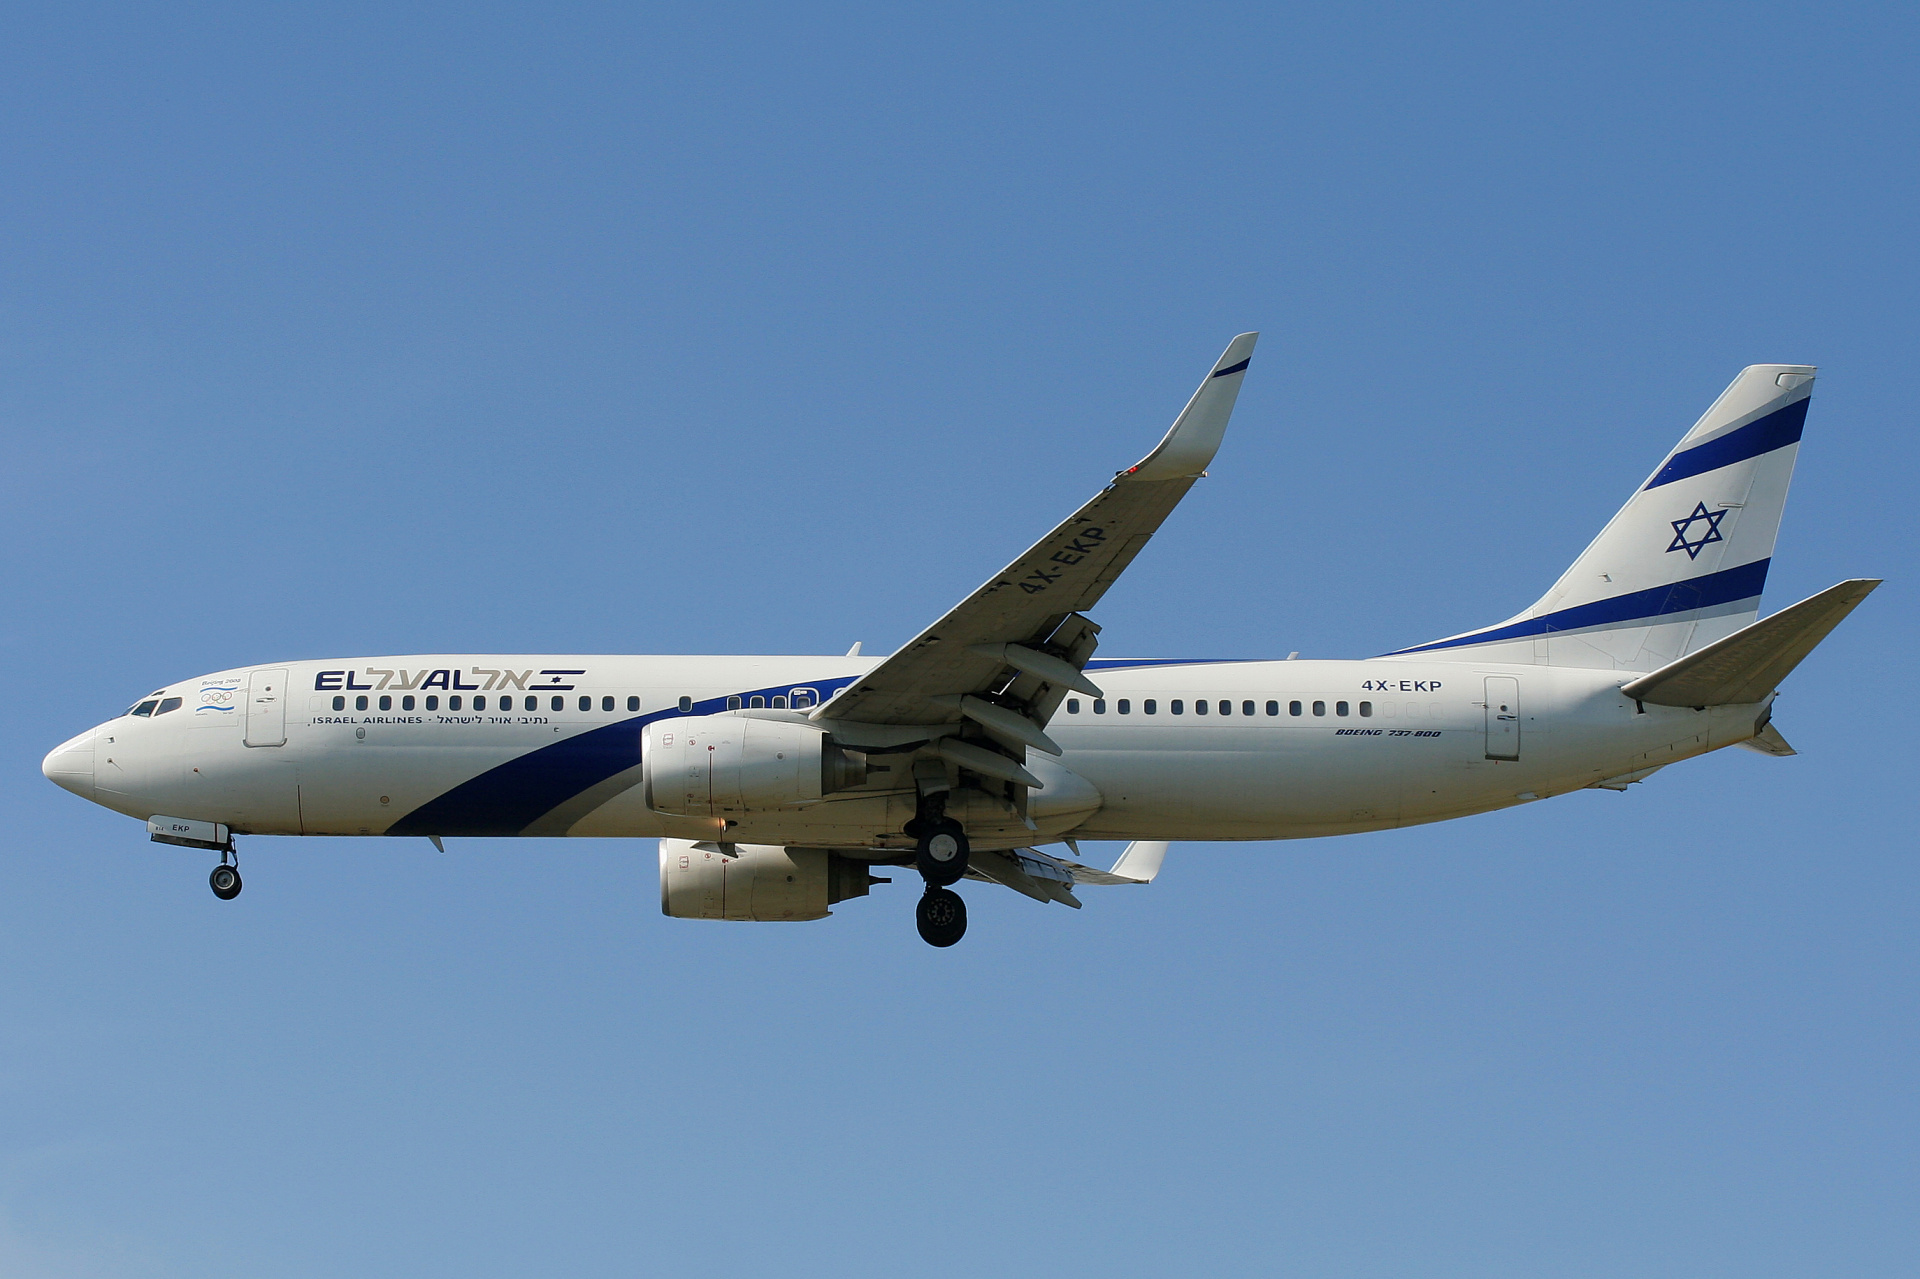 4X-EKP (naklejka Olimpiada w Pekinie 2008) (Samoloty » Spotting na EPWA » Boeing 737-800 » El Al Israel Airlines)